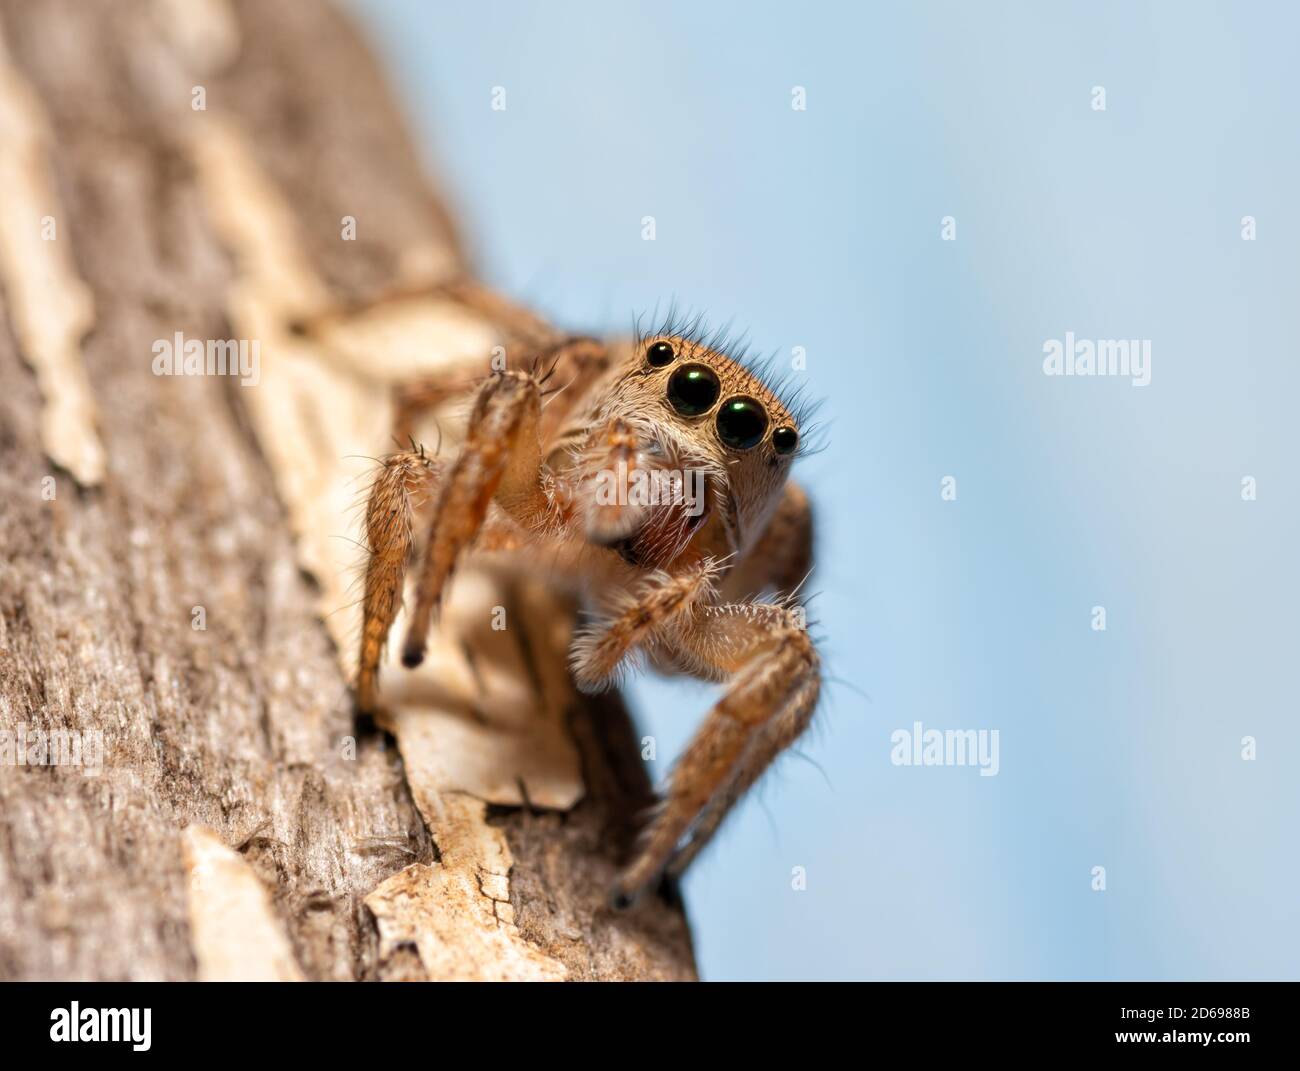 Tiny female Habronattus coecatus jumping spider looking at the viewer Stock Photo